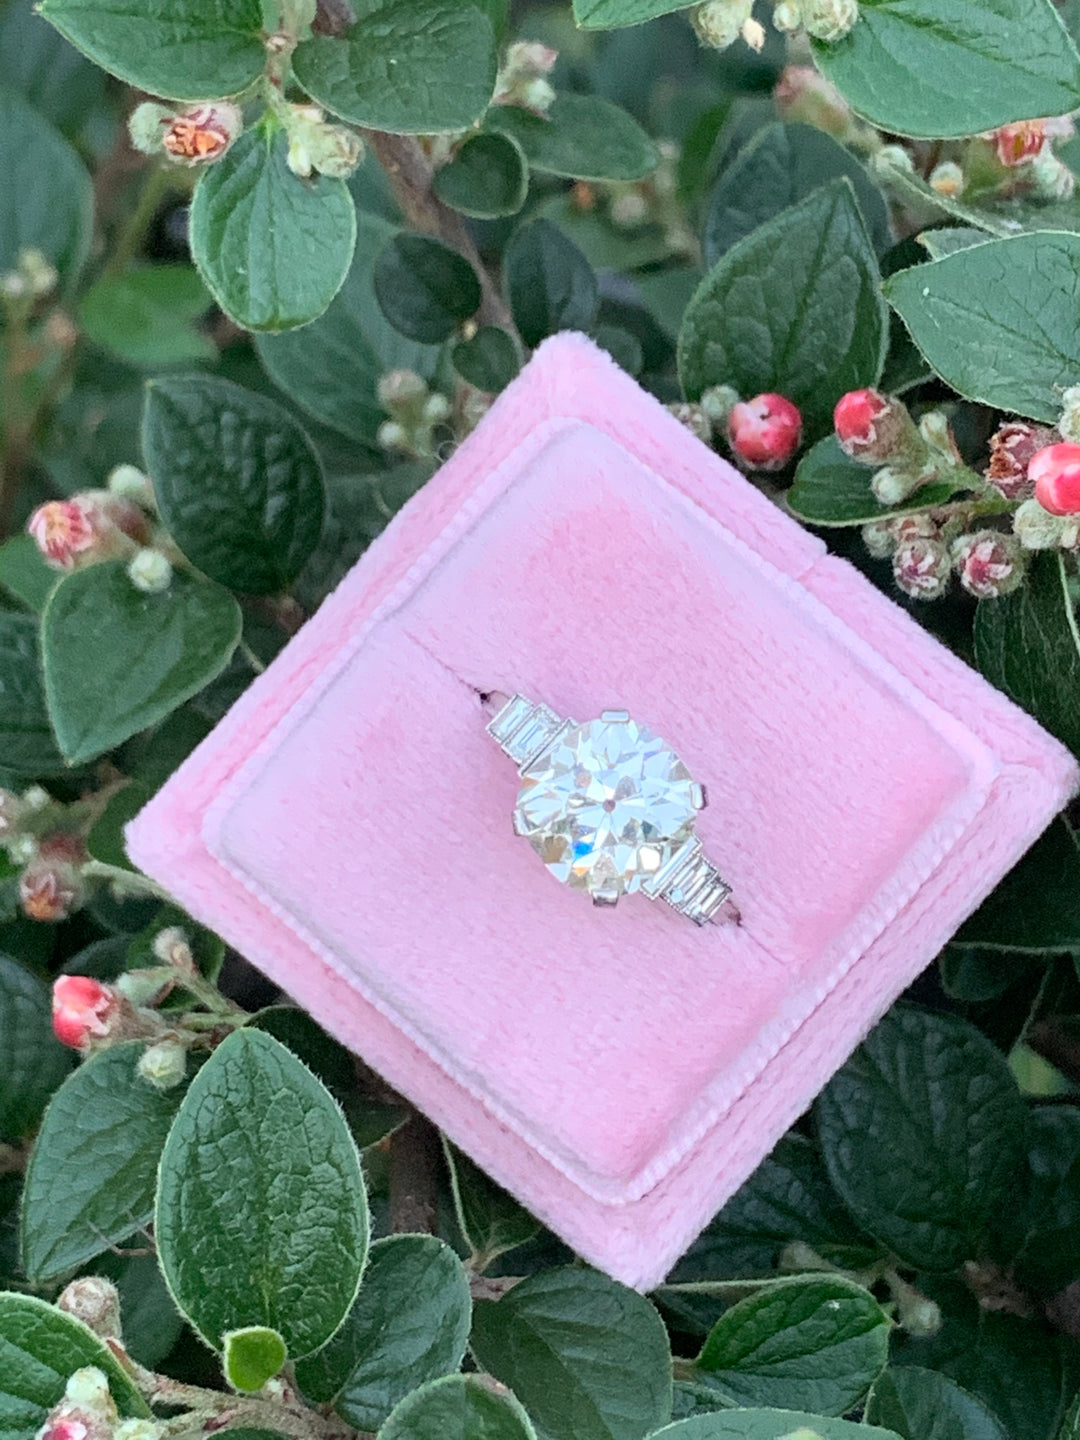 3.01 Carat Old Cushion Cut Diamond Engagement Ring in Platinum